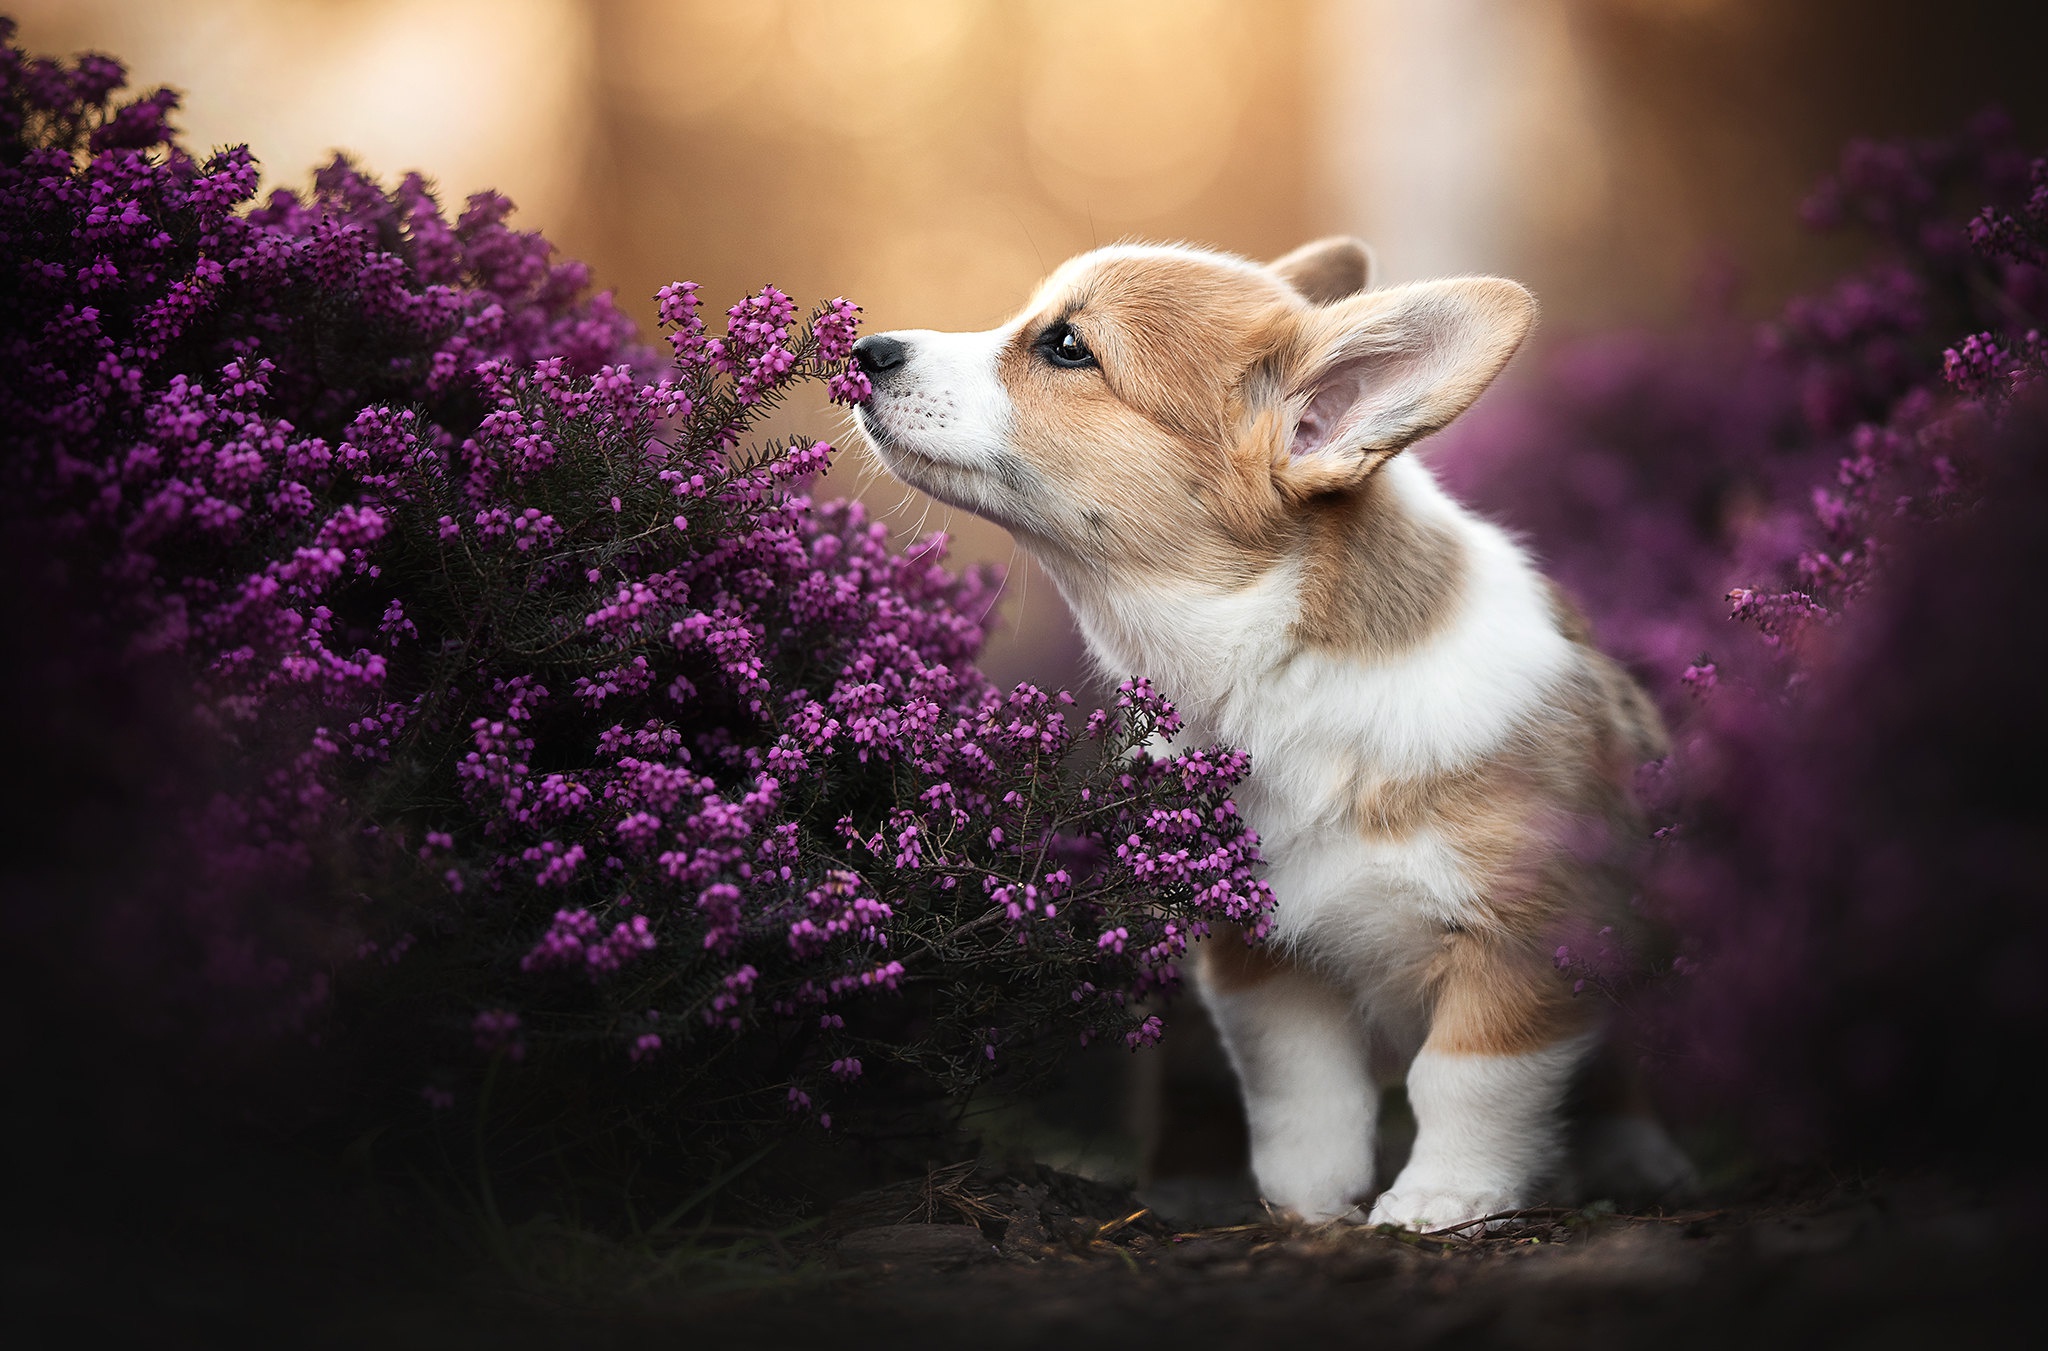 General 2048x1351 puppies outdoors plants dog animals mammals Corgi closeup flowers